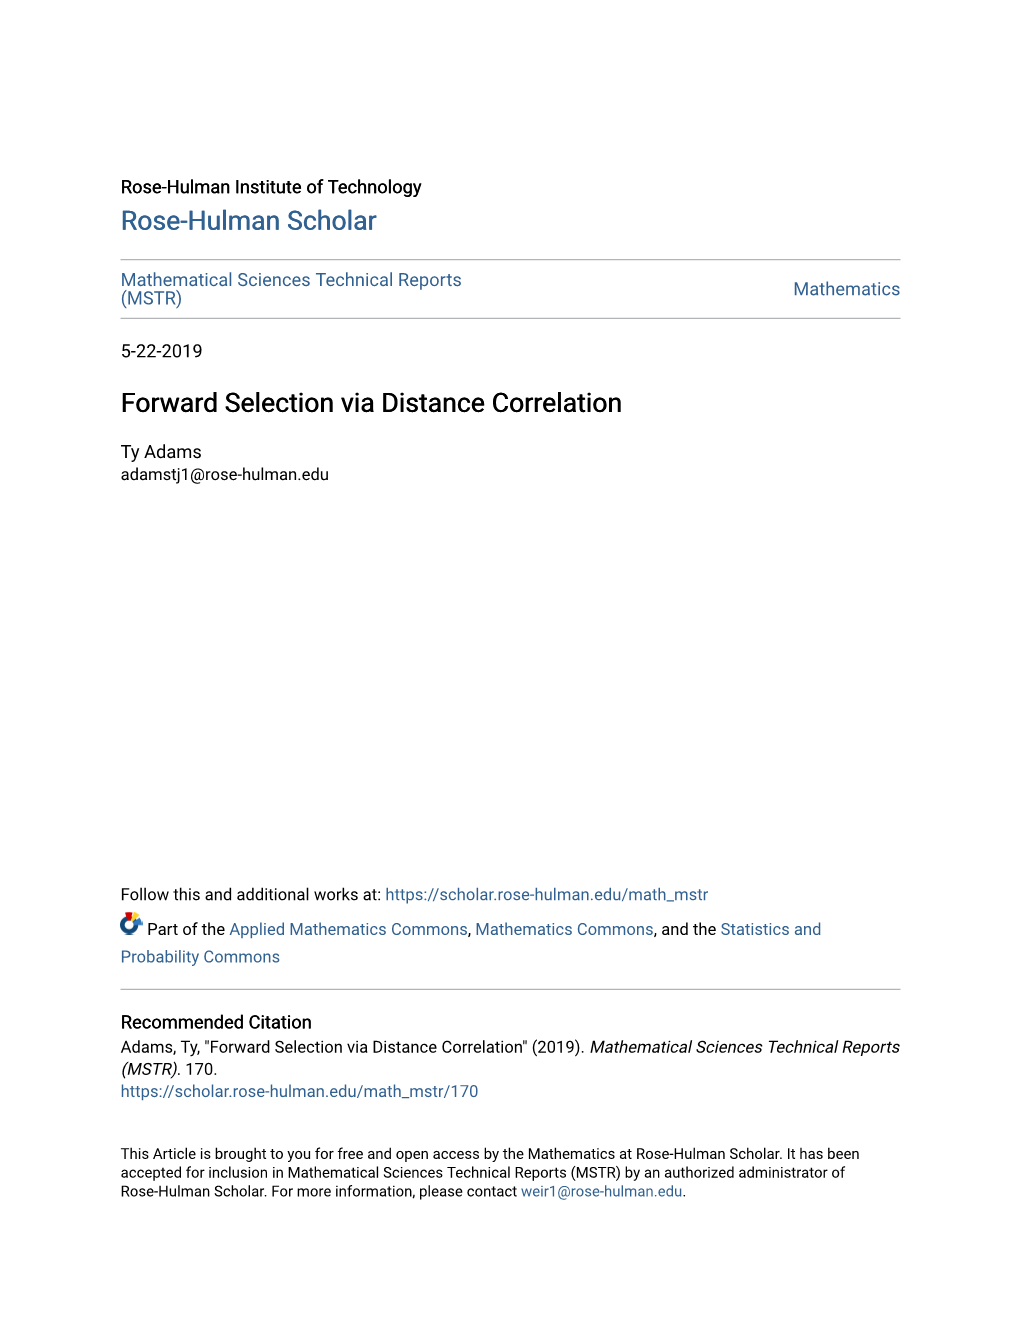 Forward Selection Via Distance Correlation